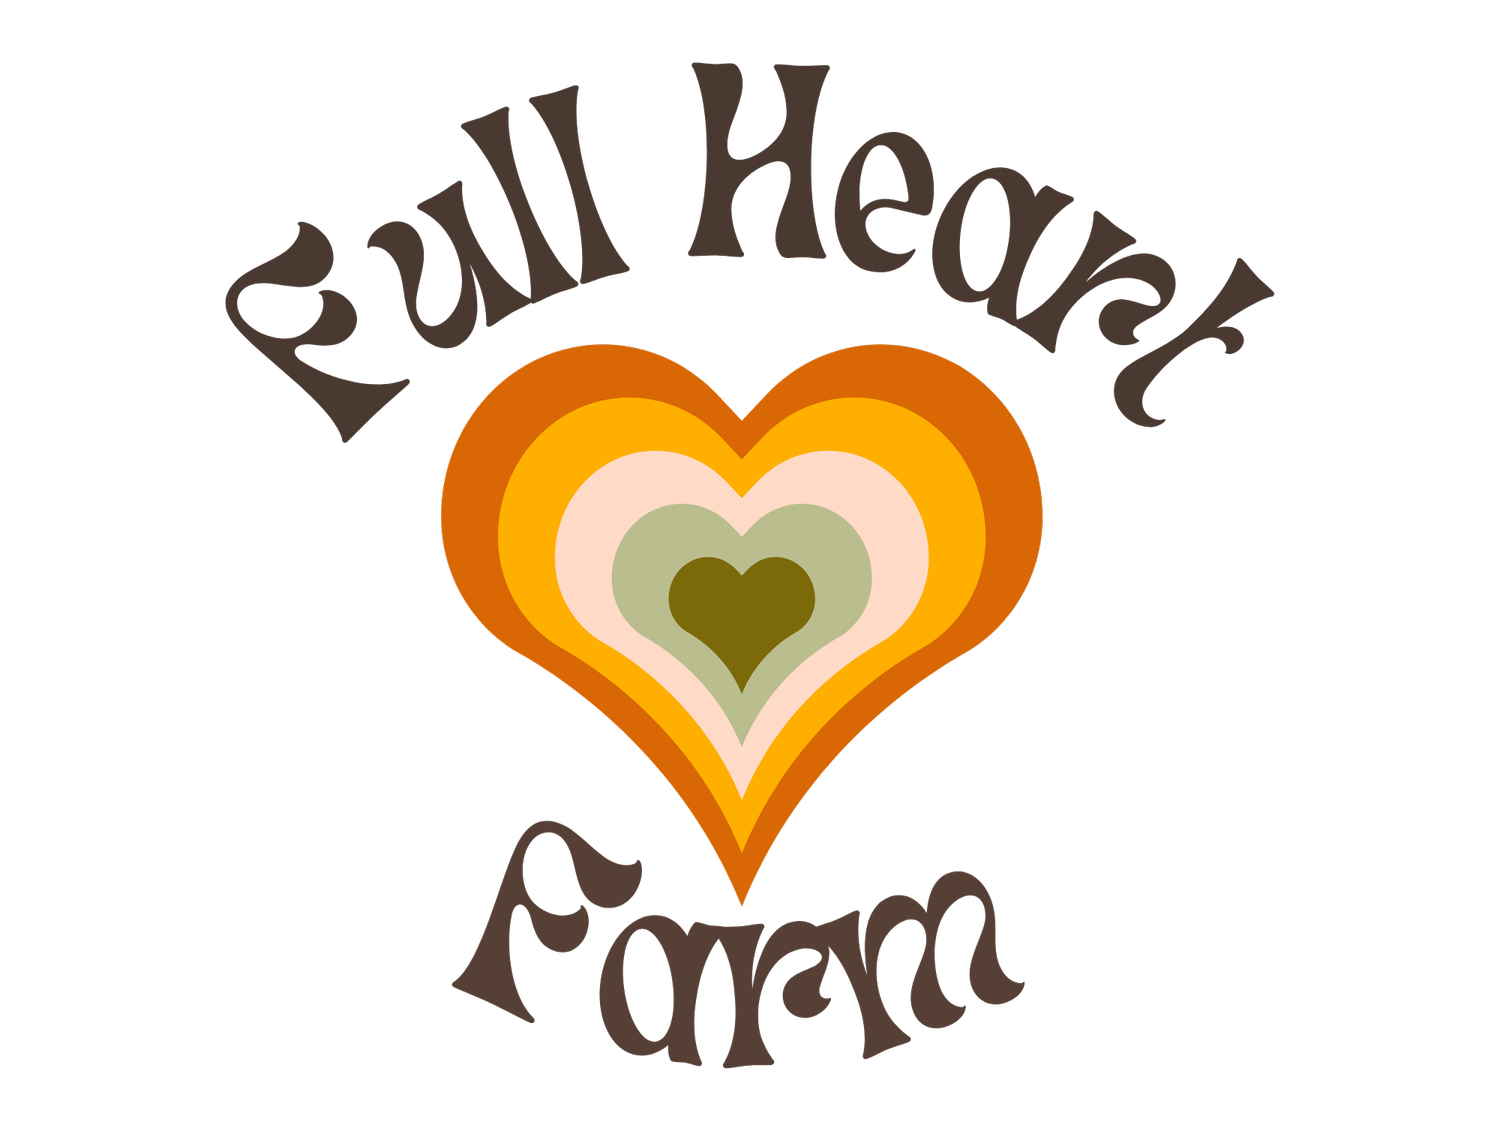 Full Heart Farm